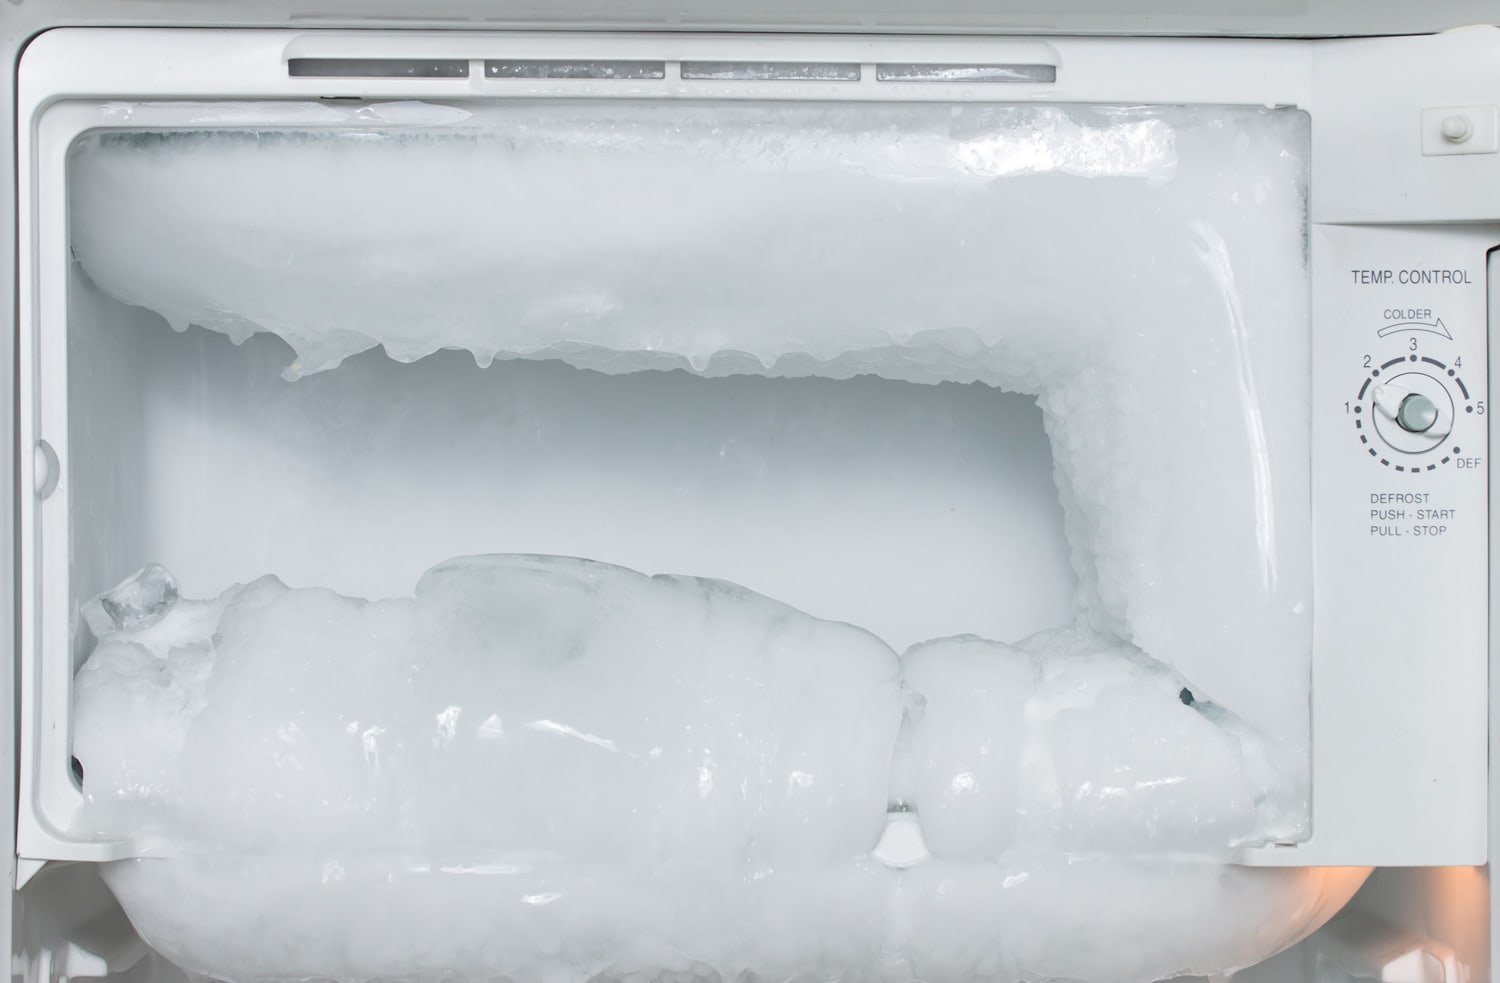 white freezer refrigerator is opened